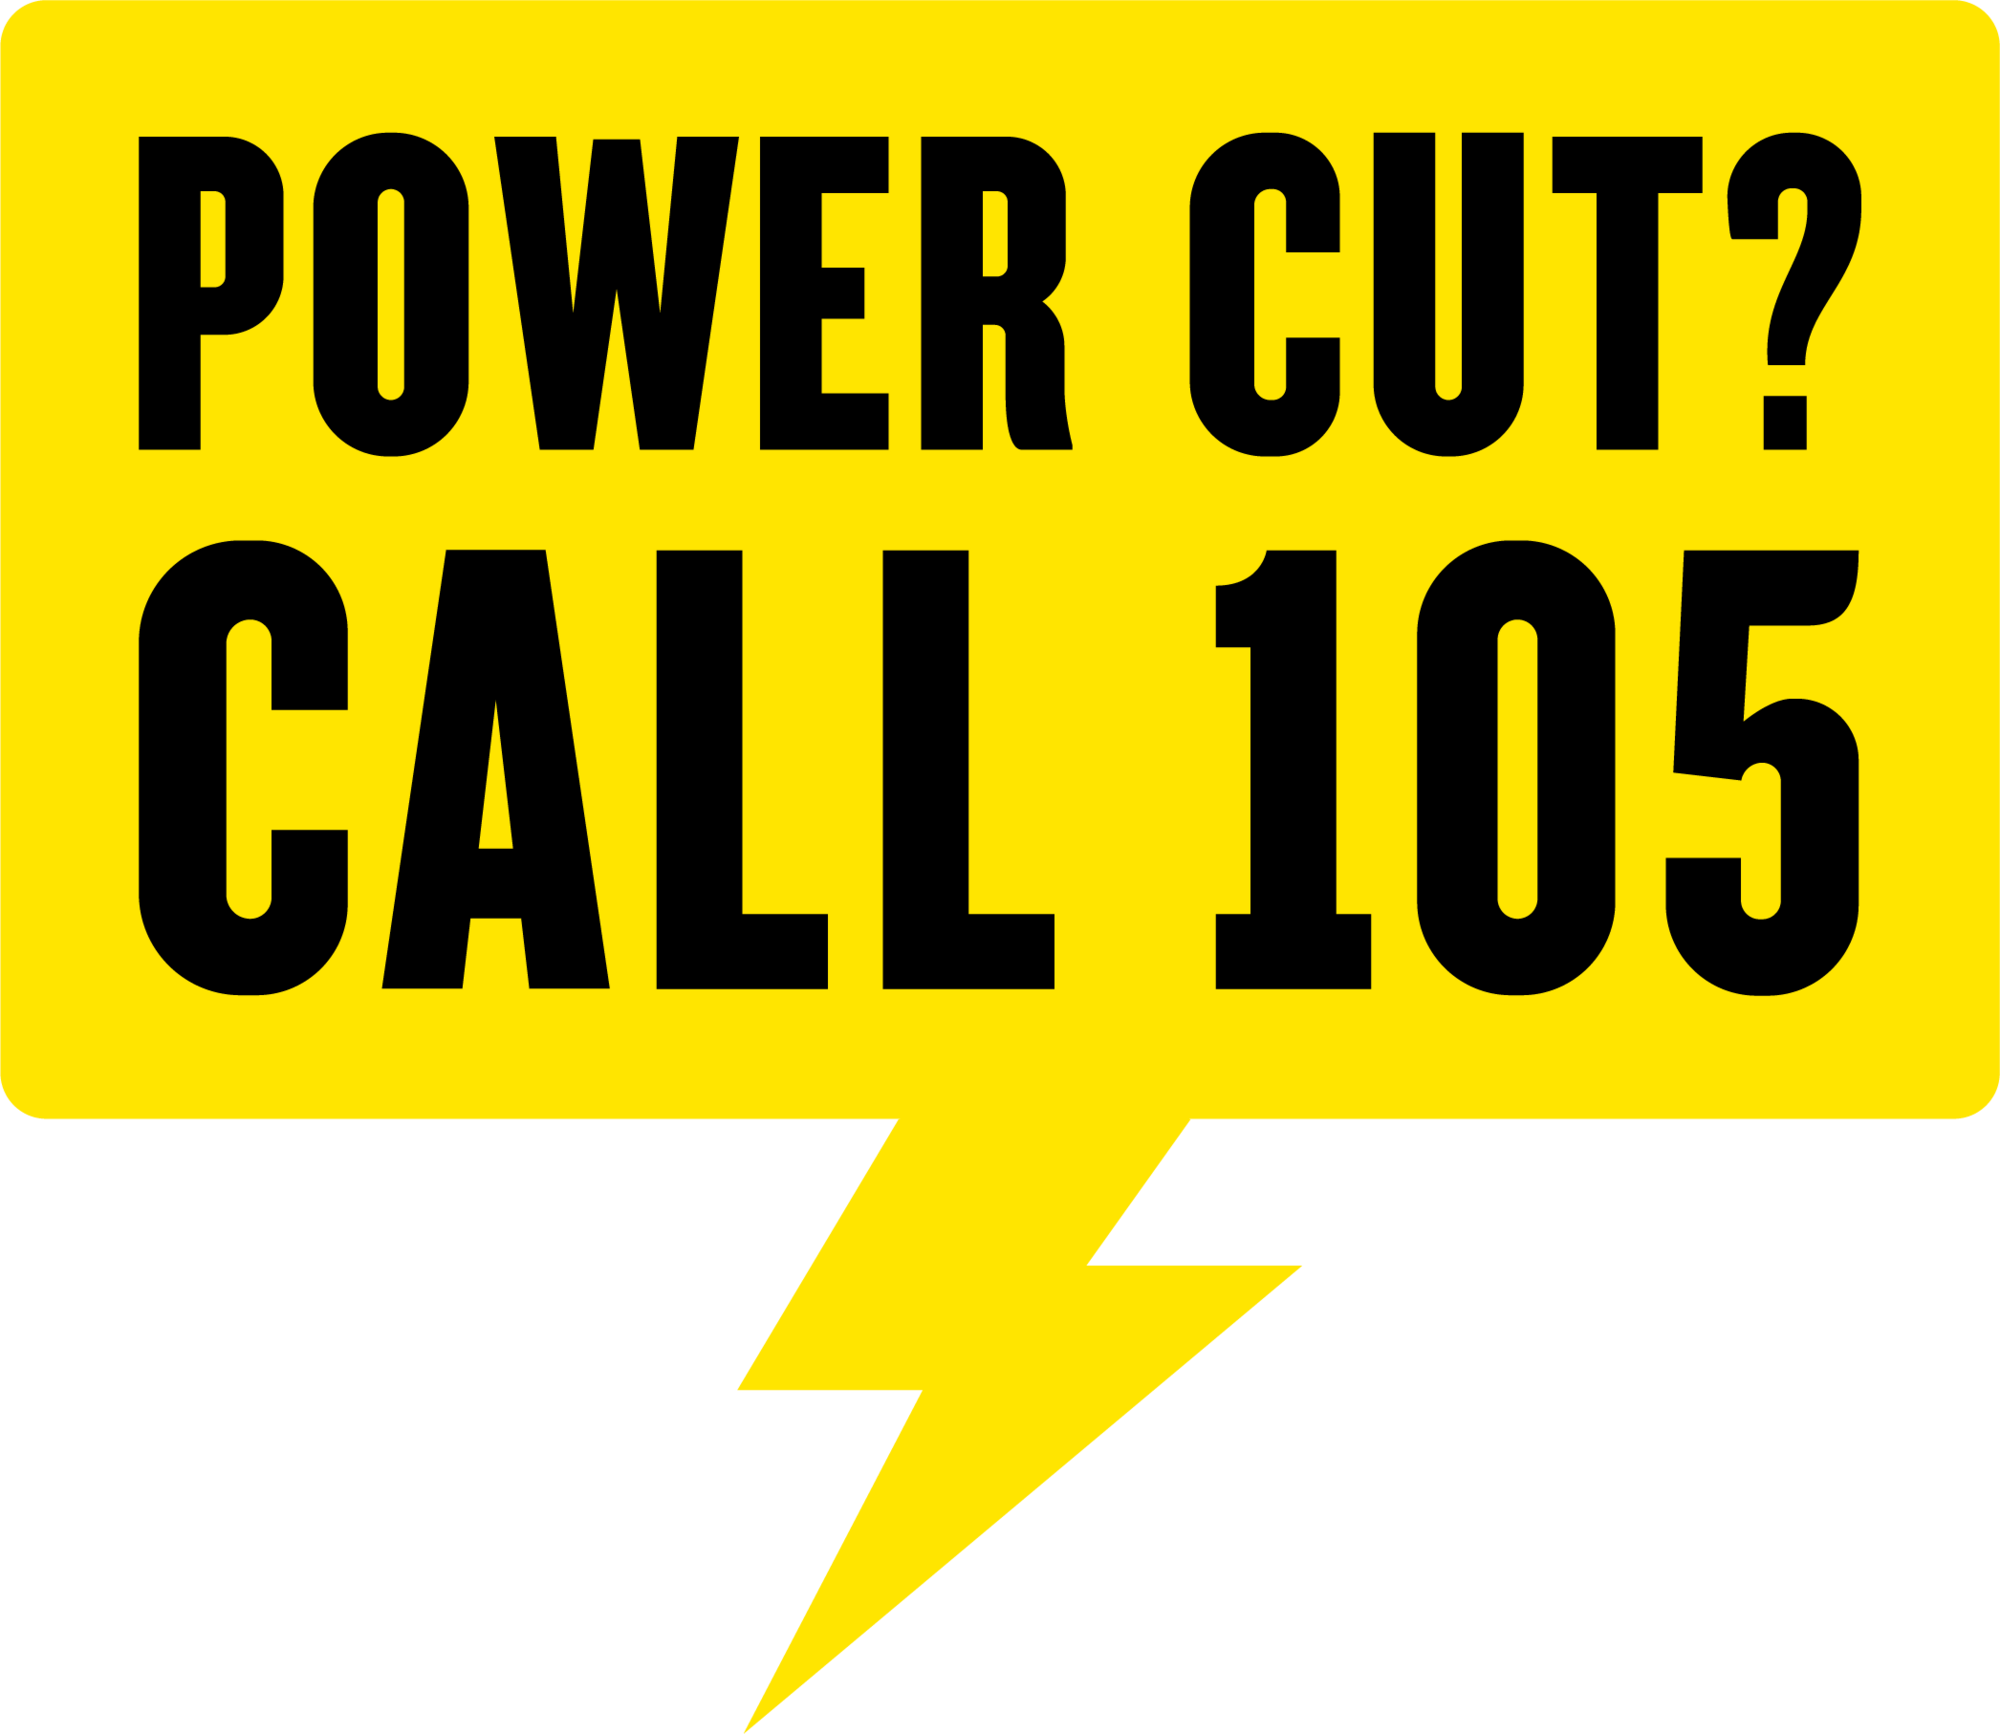 power cut call 105